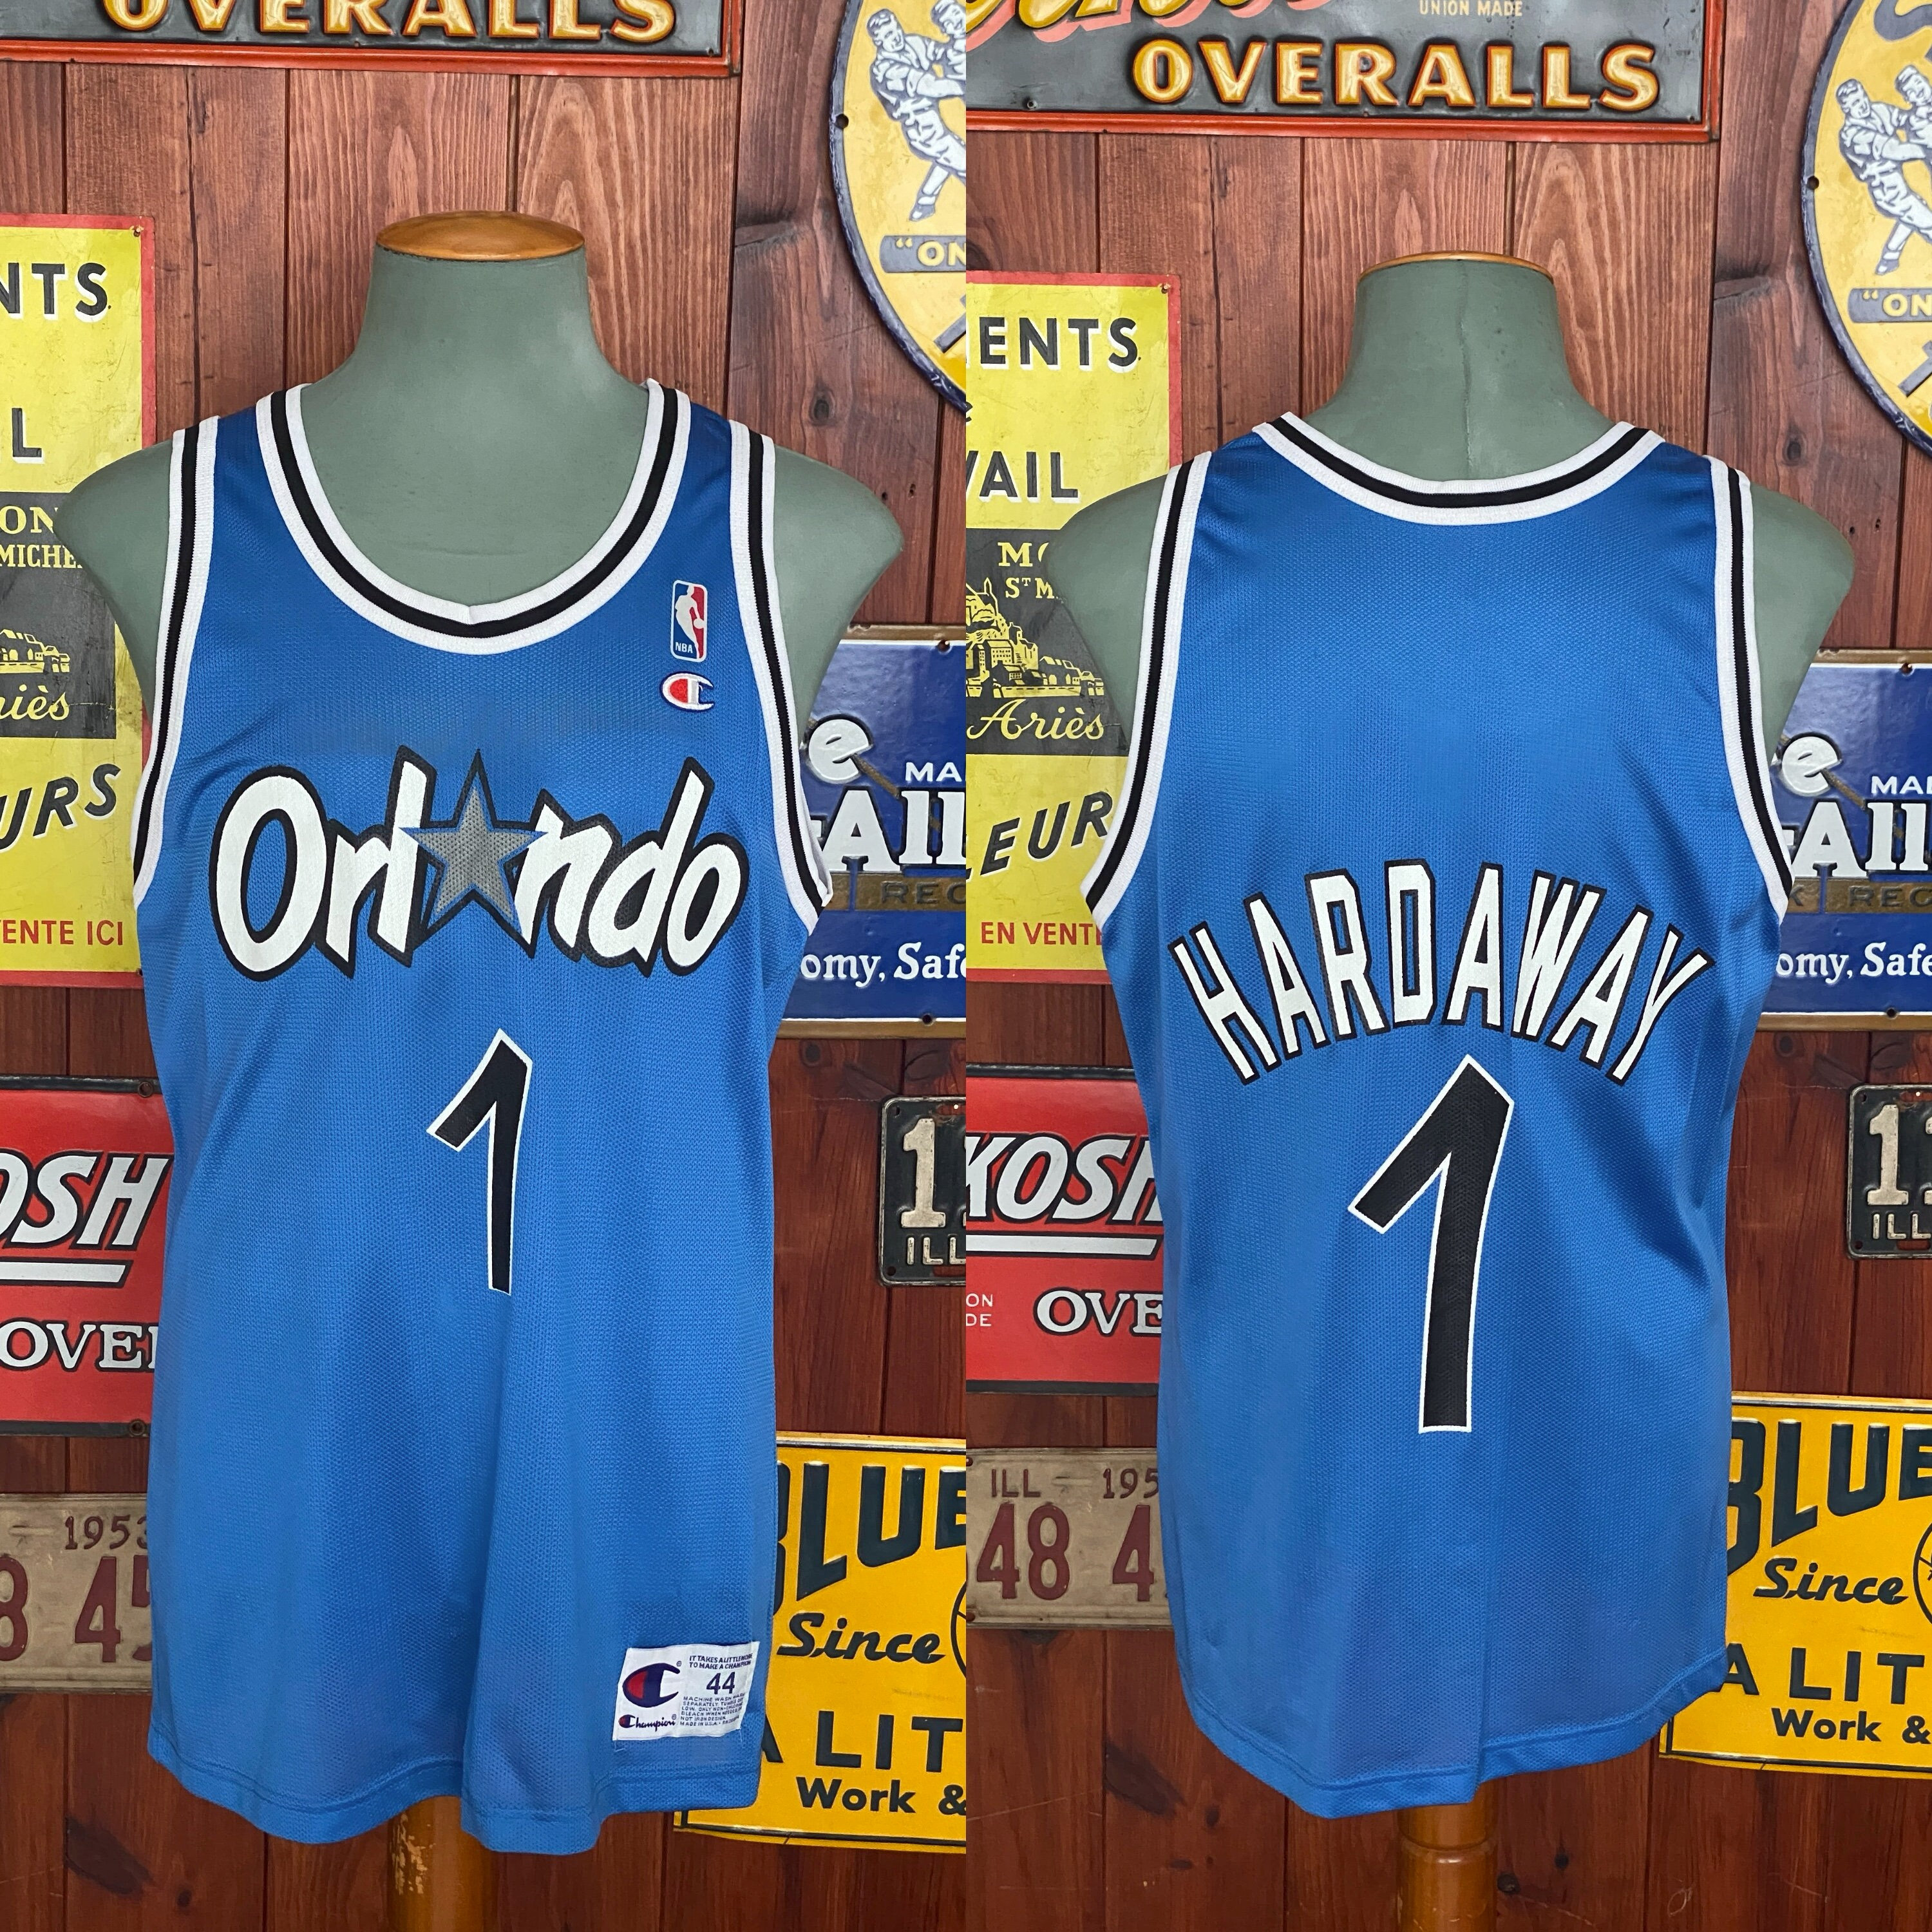 CHAMPION Penny Hardaway #1 Orlando Magic NBA Basketball Jersey Shirt 90s  Vintage